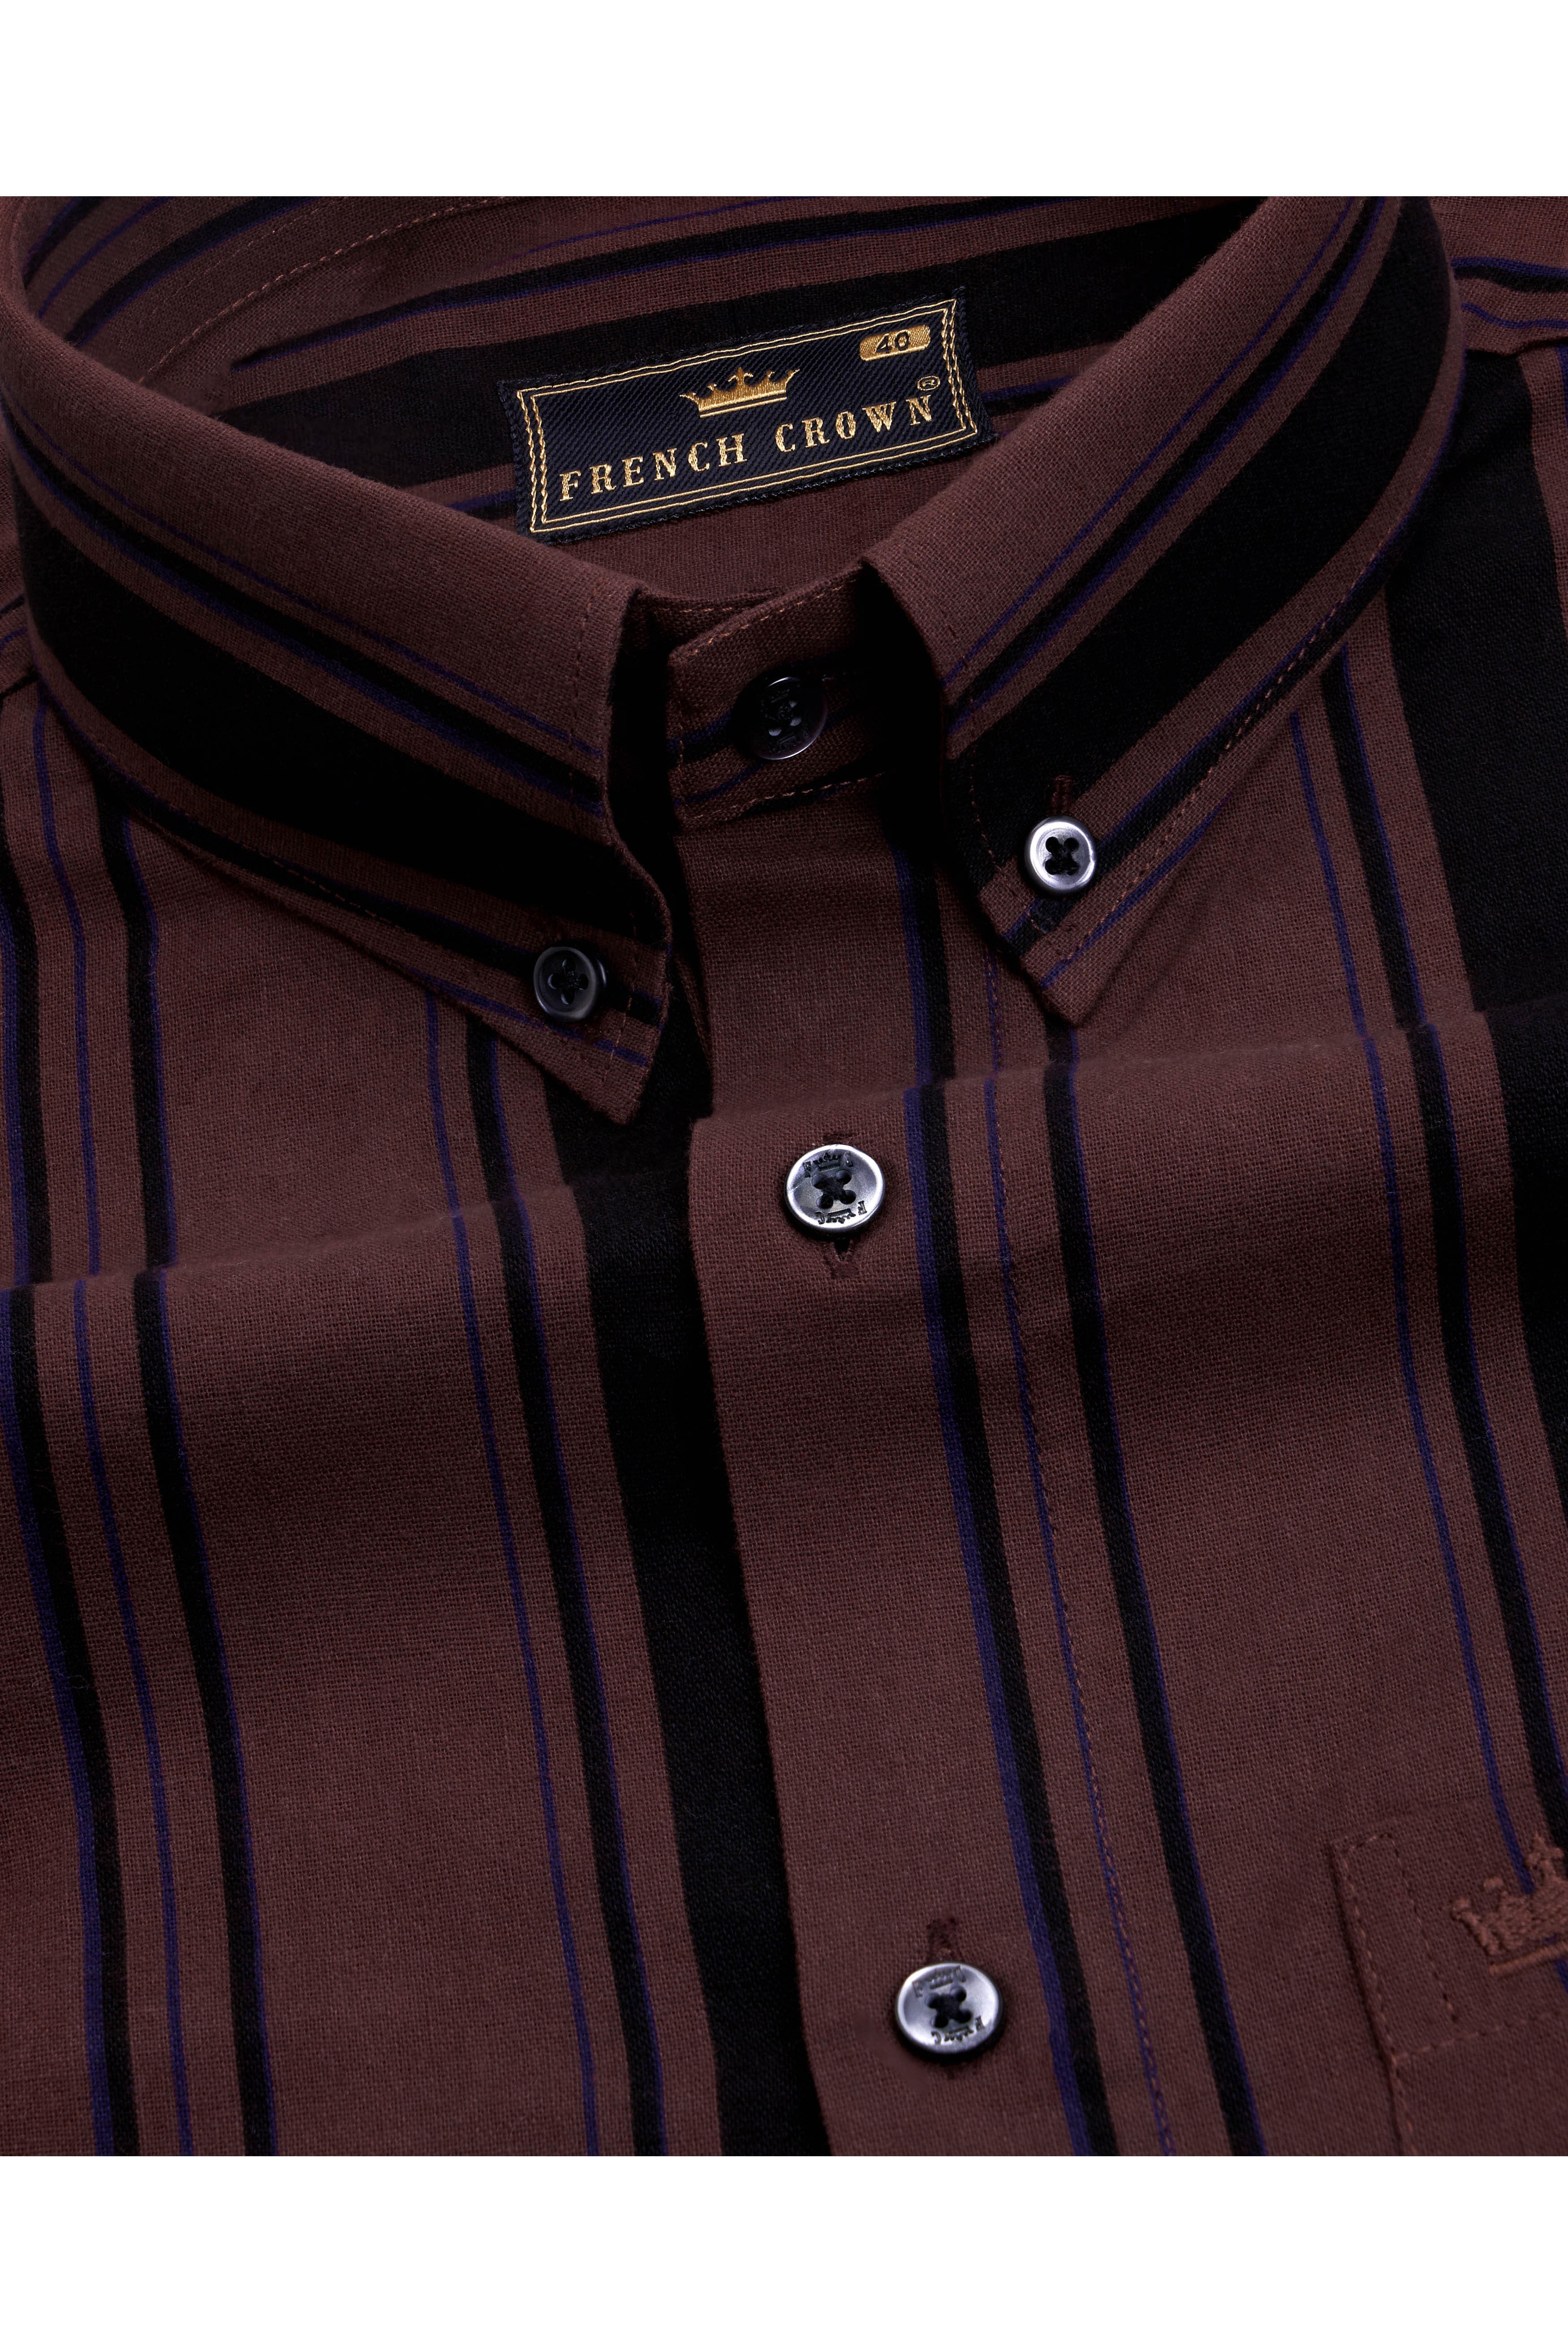 Matterhorn Brown Striped with Funky Cat Printed Royal Oxford Designer Shirt